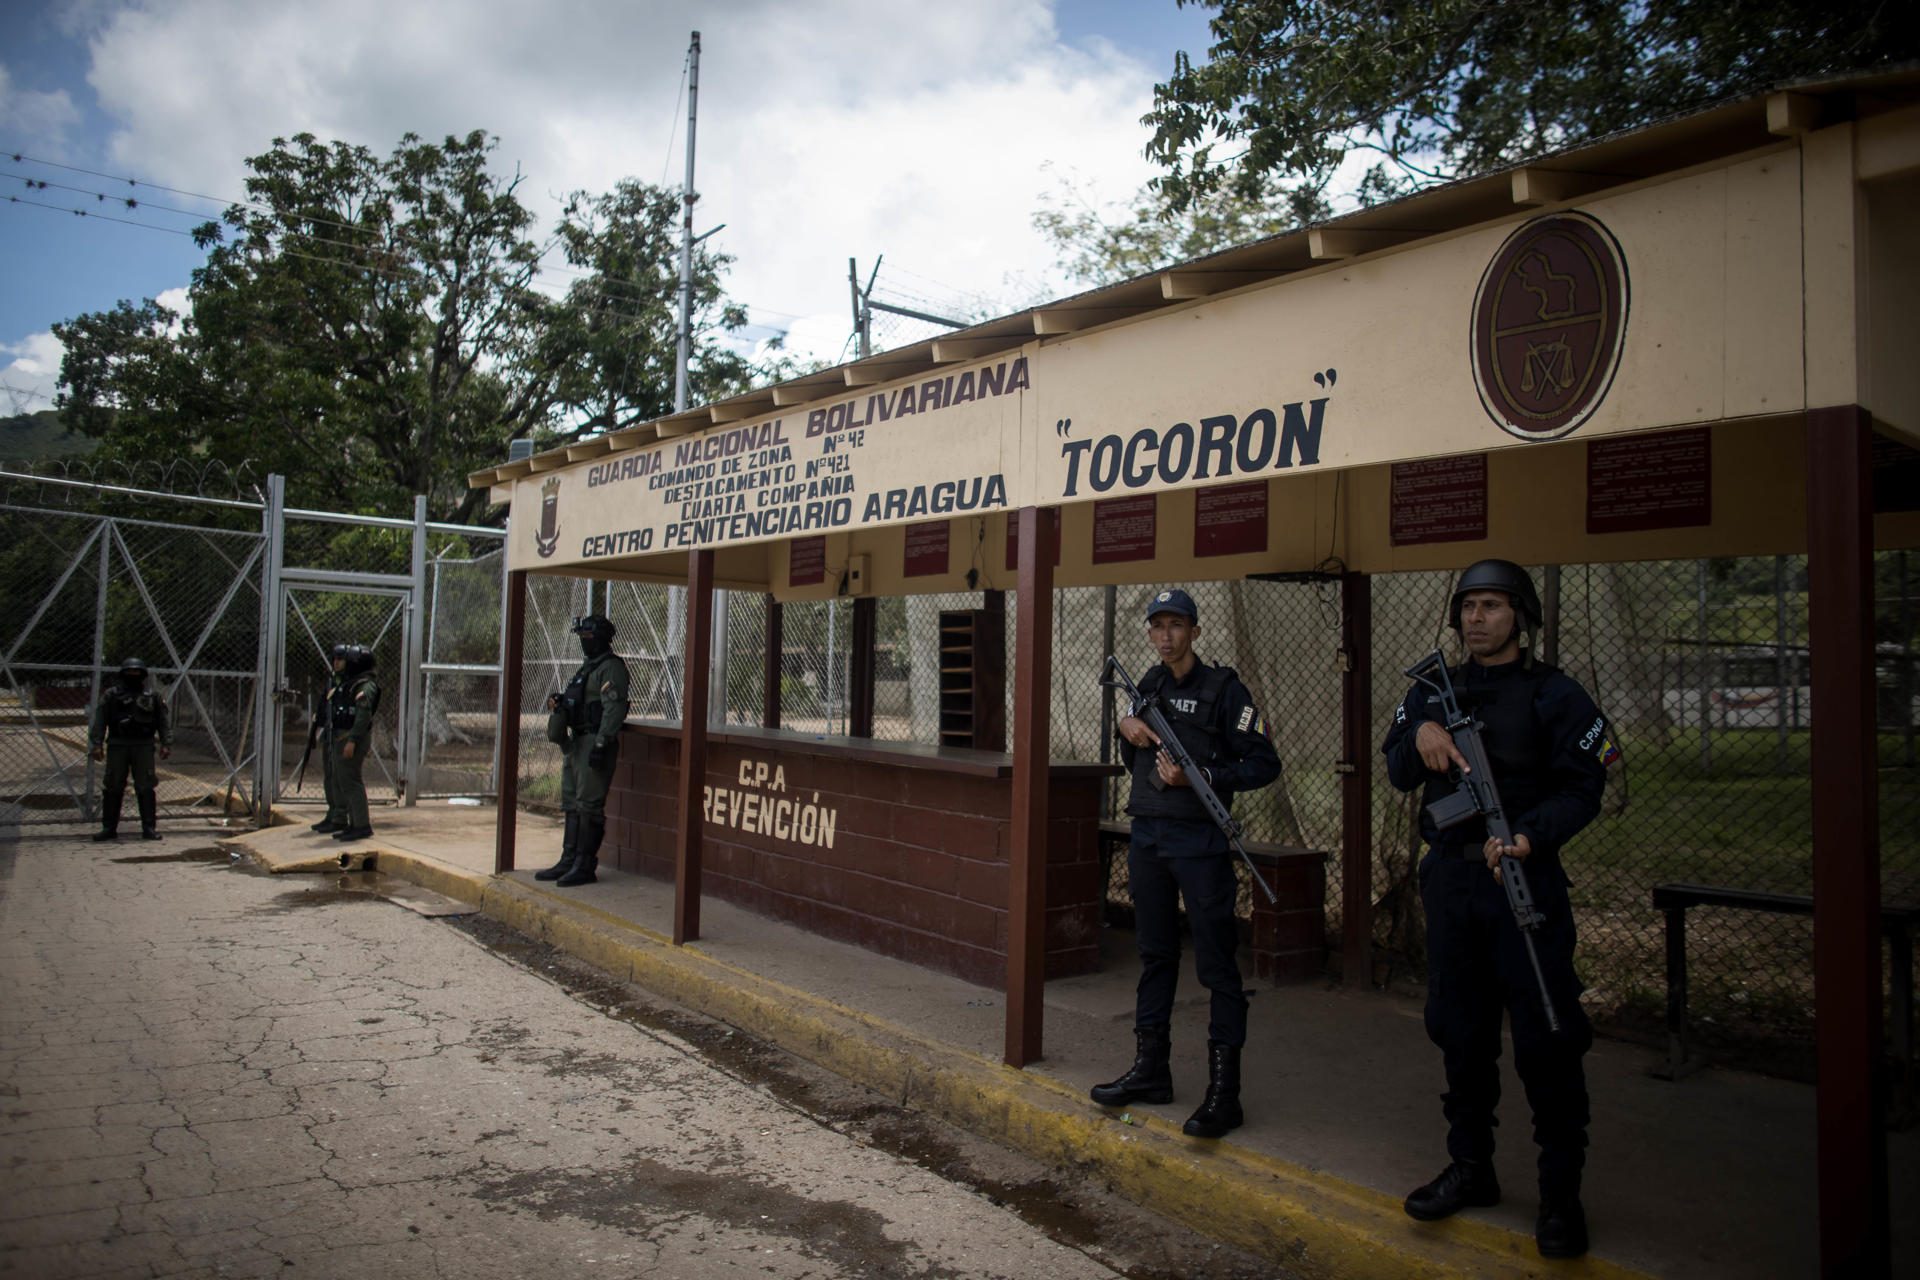 Characteristics that make the Aragua train a unique criminal gang in Latin America